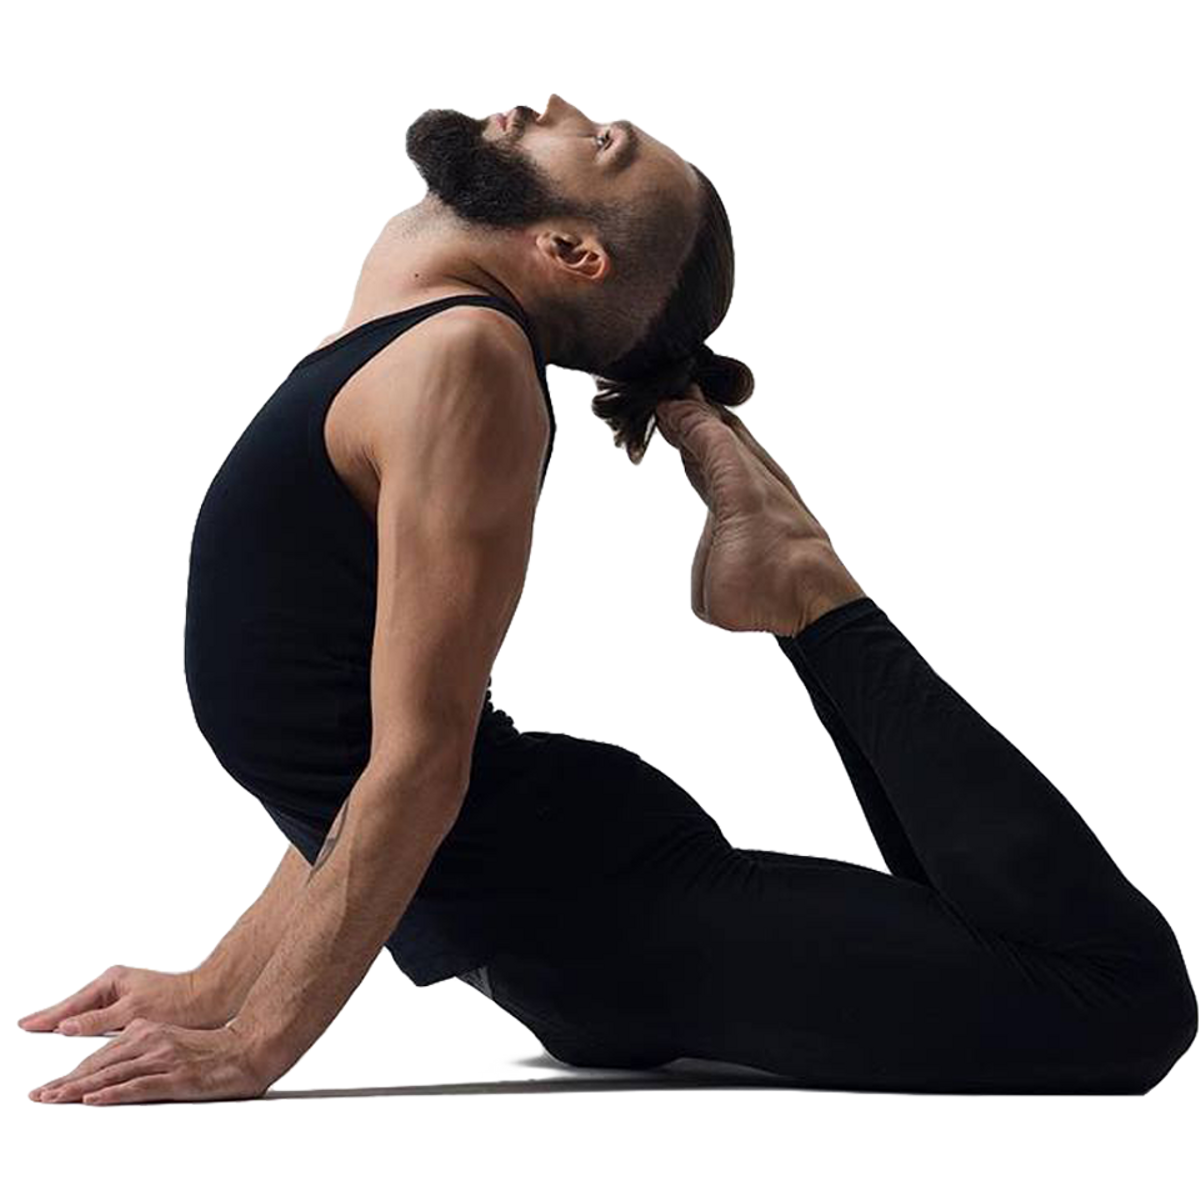 Yoga PNG images Download 